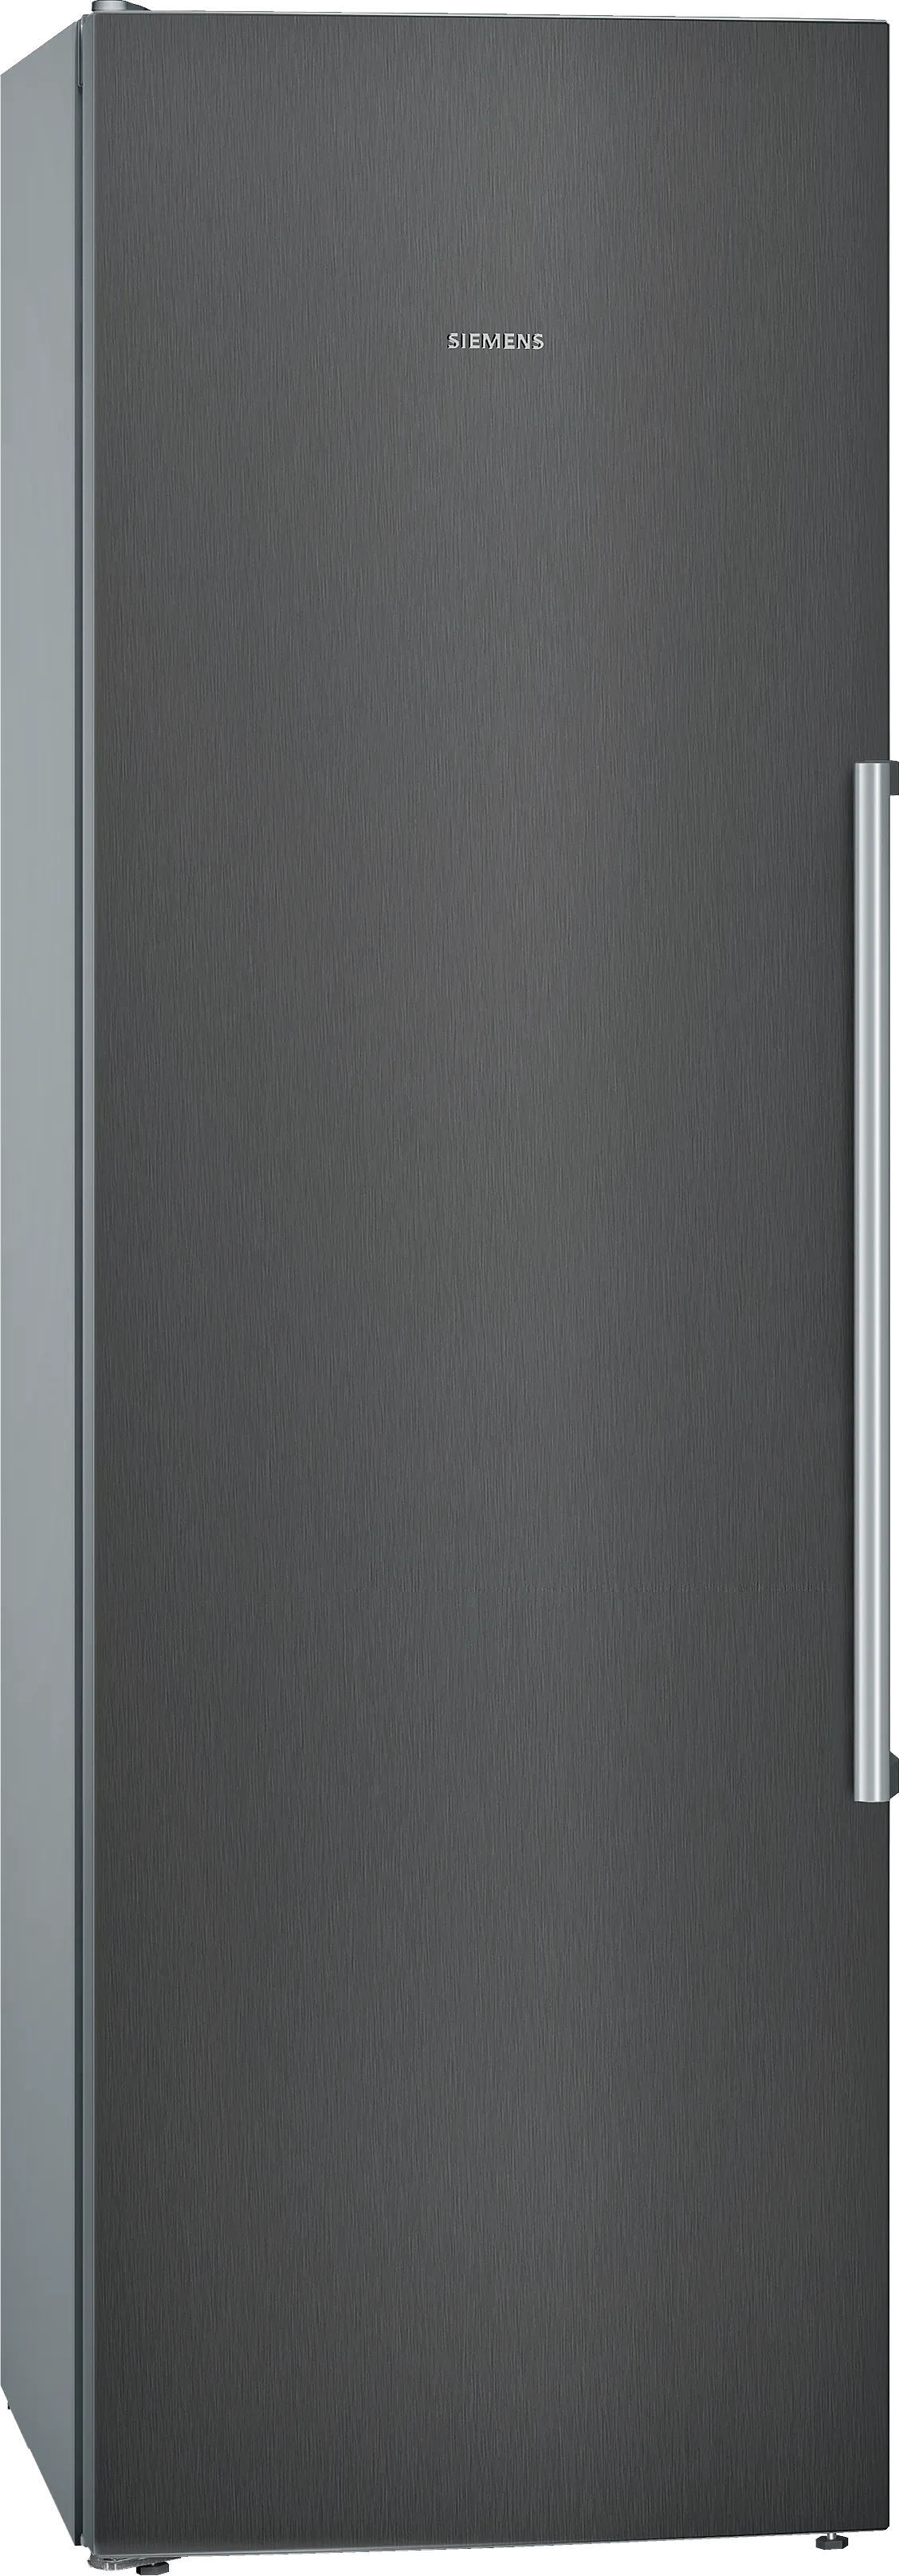 IQ500 free-standing fridge 186 x 60 cm Black stainless steel 